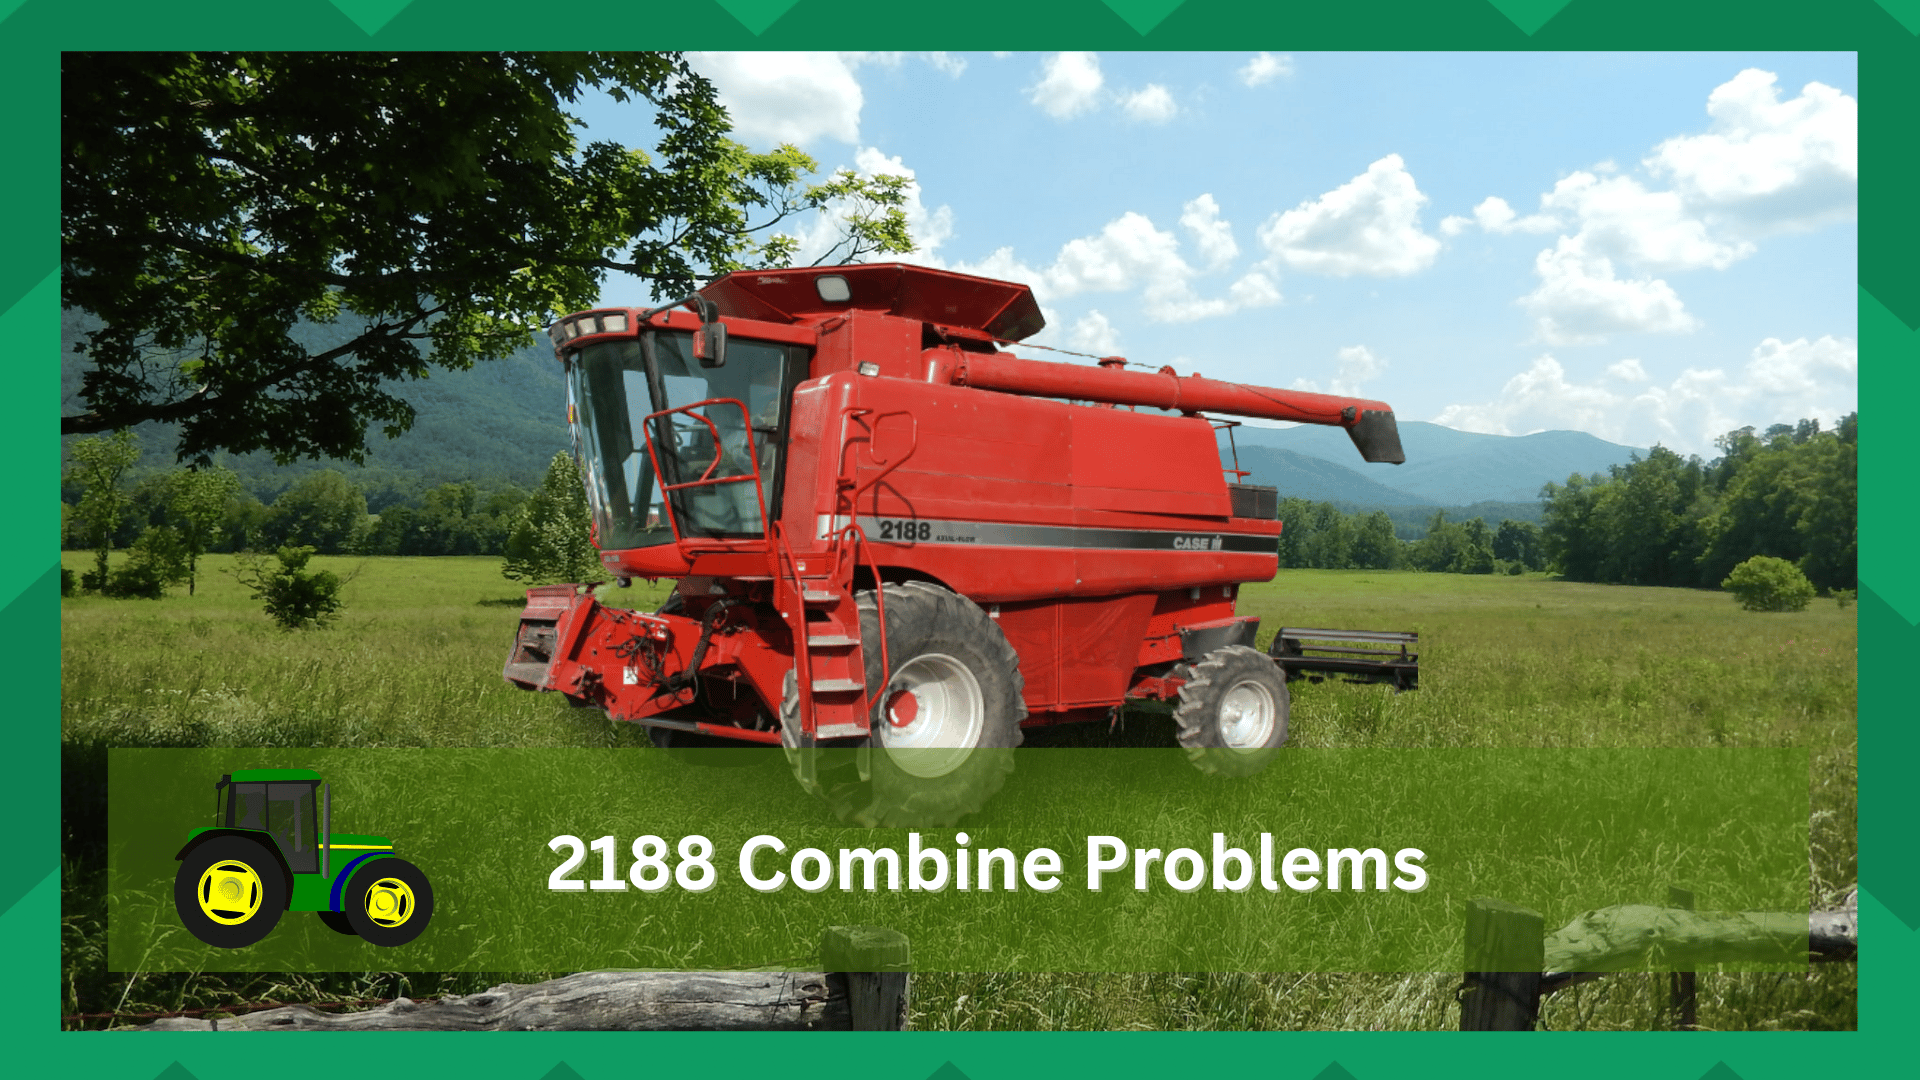 2188 combine problems